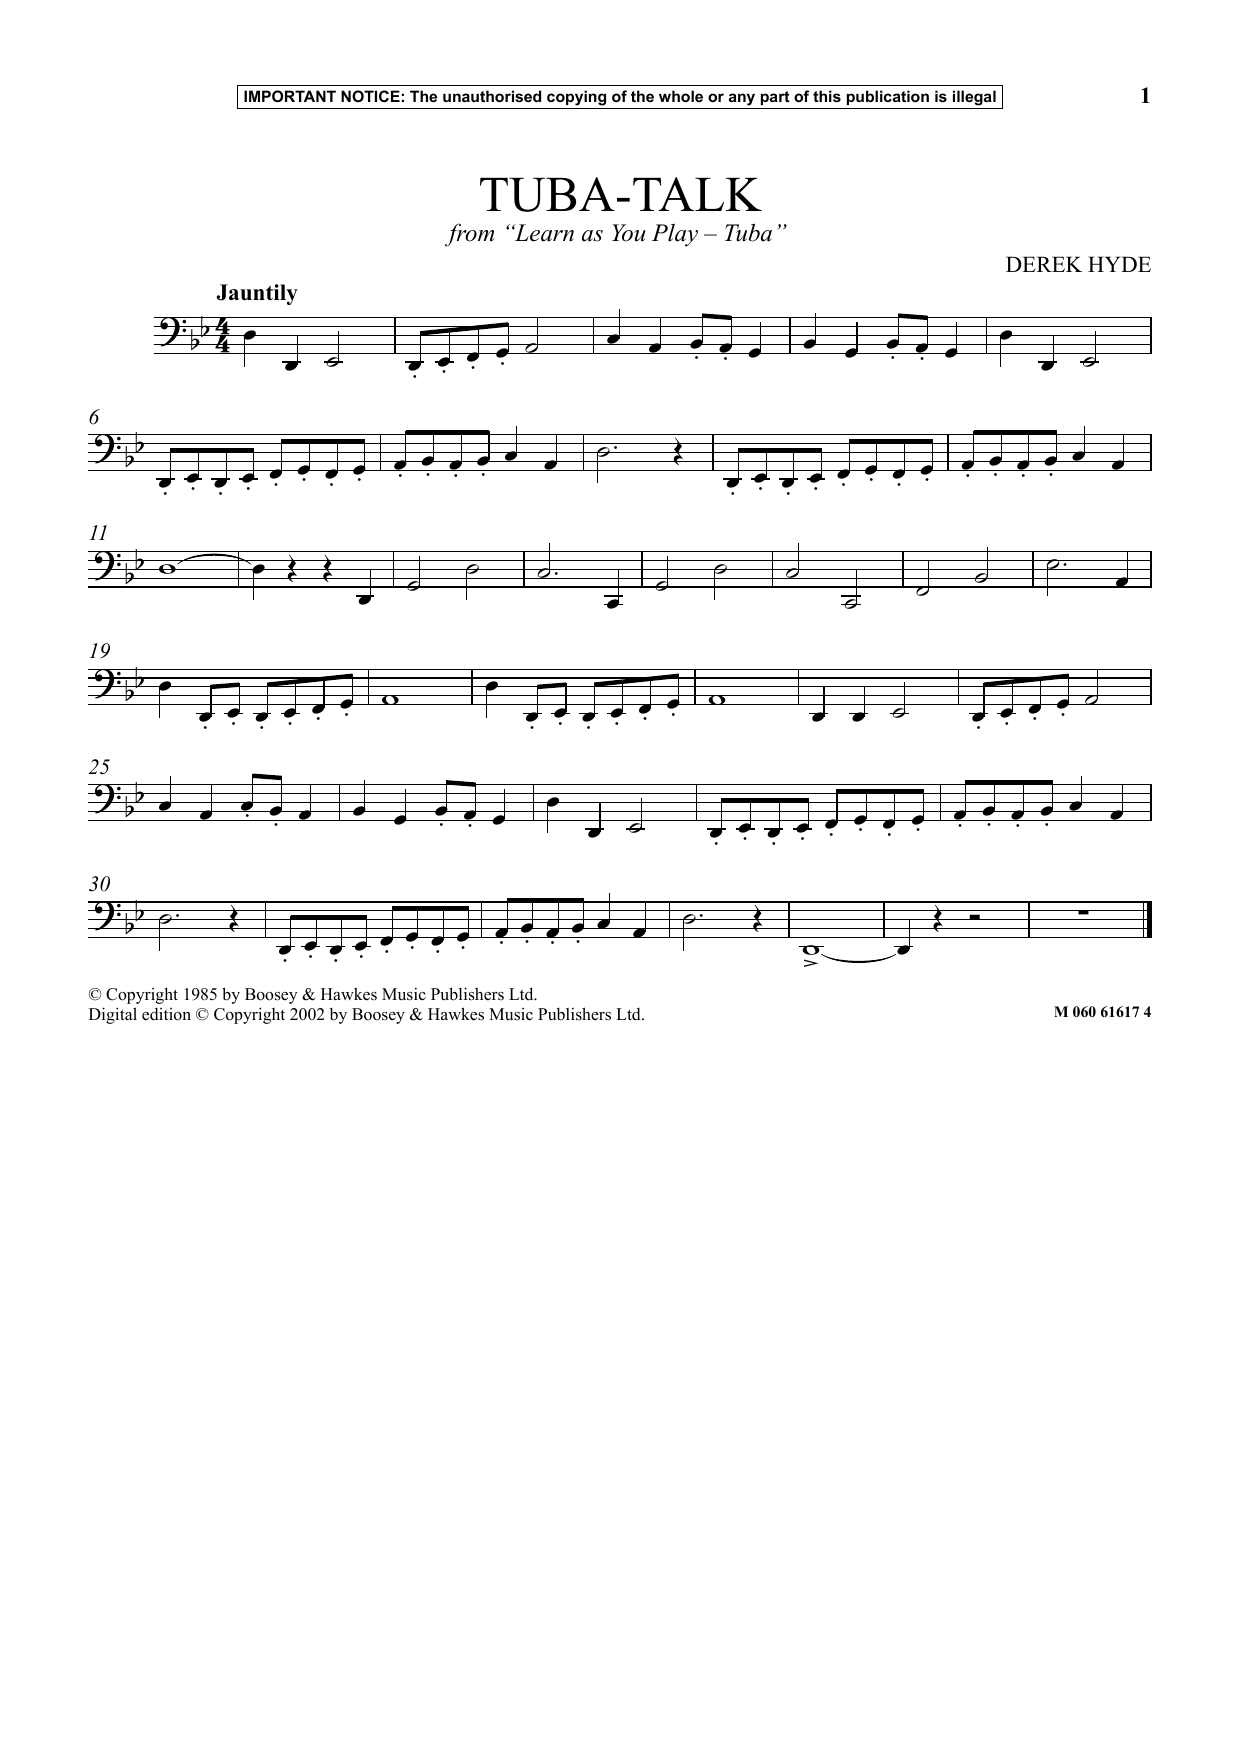 Download Derek Hyde Tuba Talk (from Learn As You Play Tuba) Sheet Music